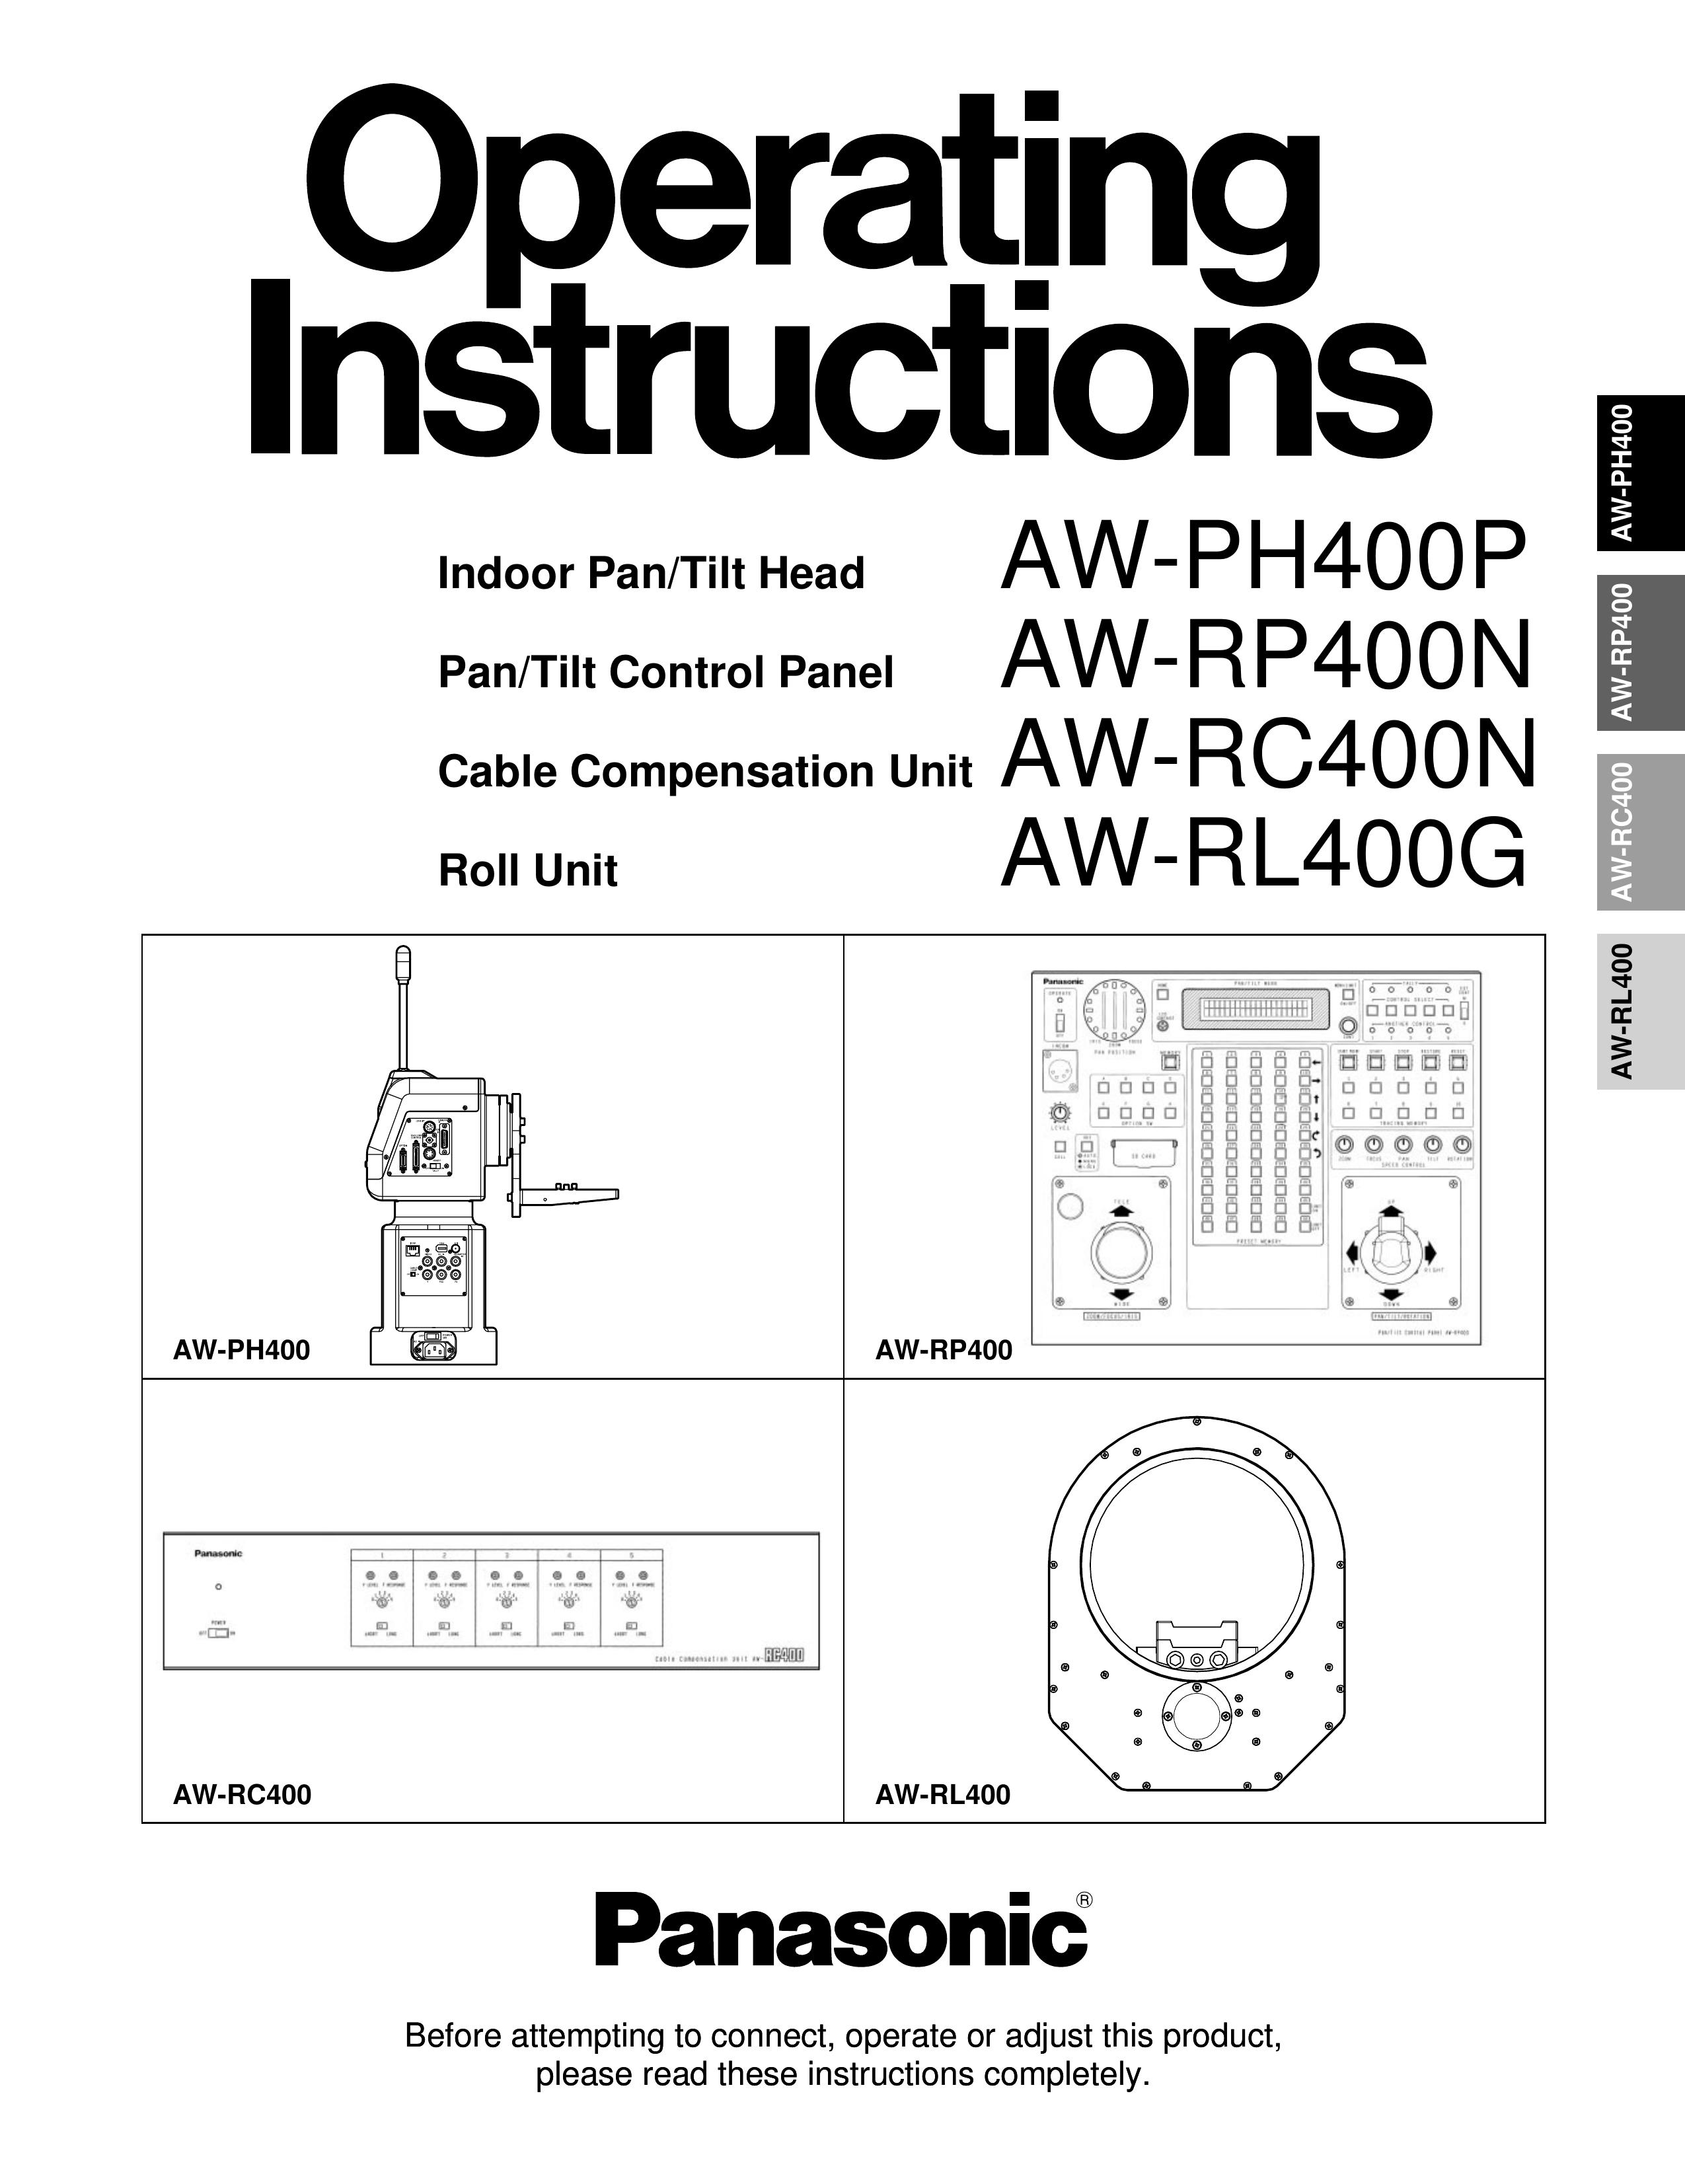 Panasonic AW-RL400 Camcorder Accessories User Manual